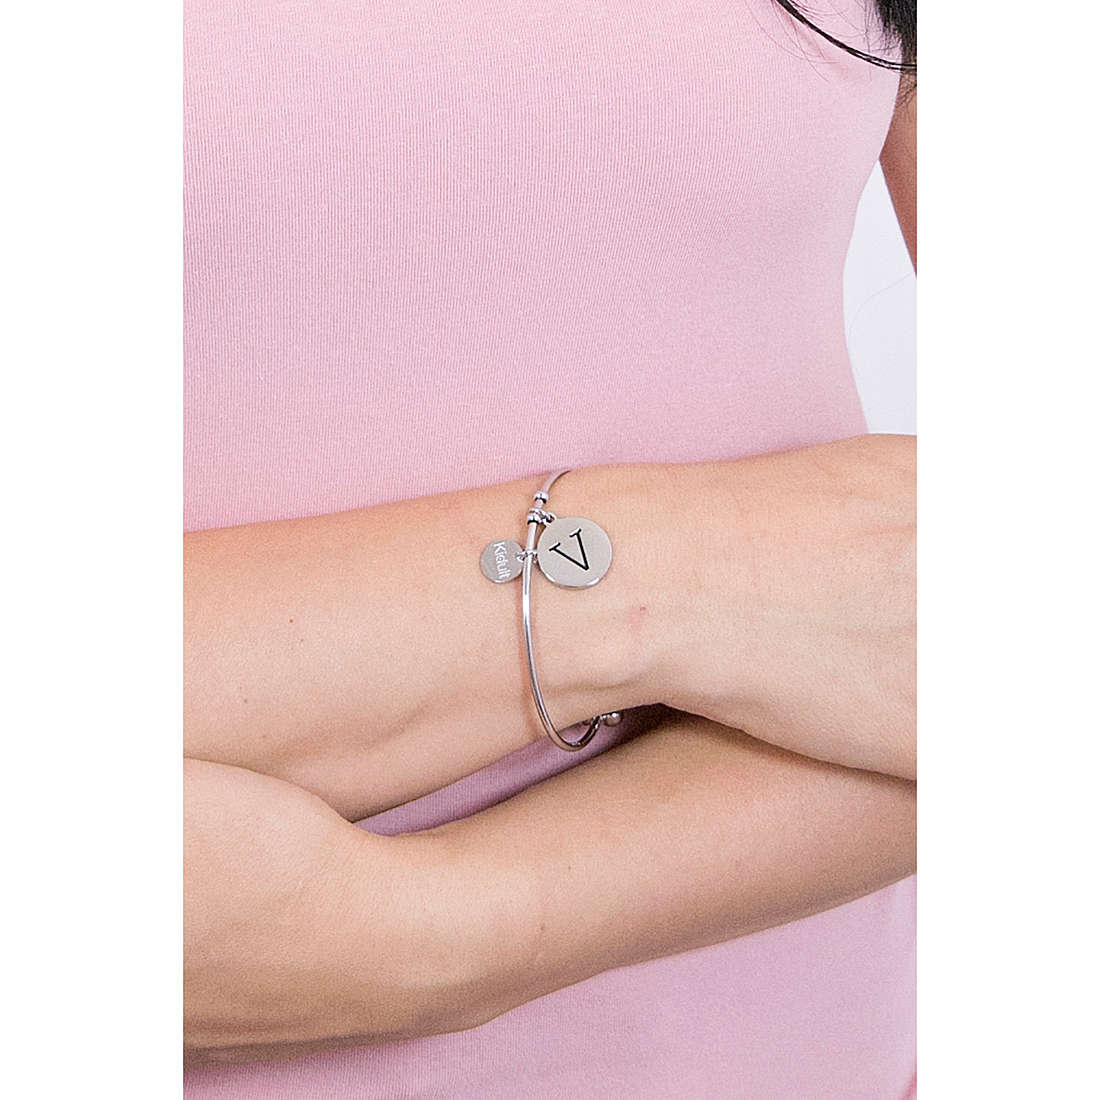 Kidult bracelets Symbols woman 231555v wearing